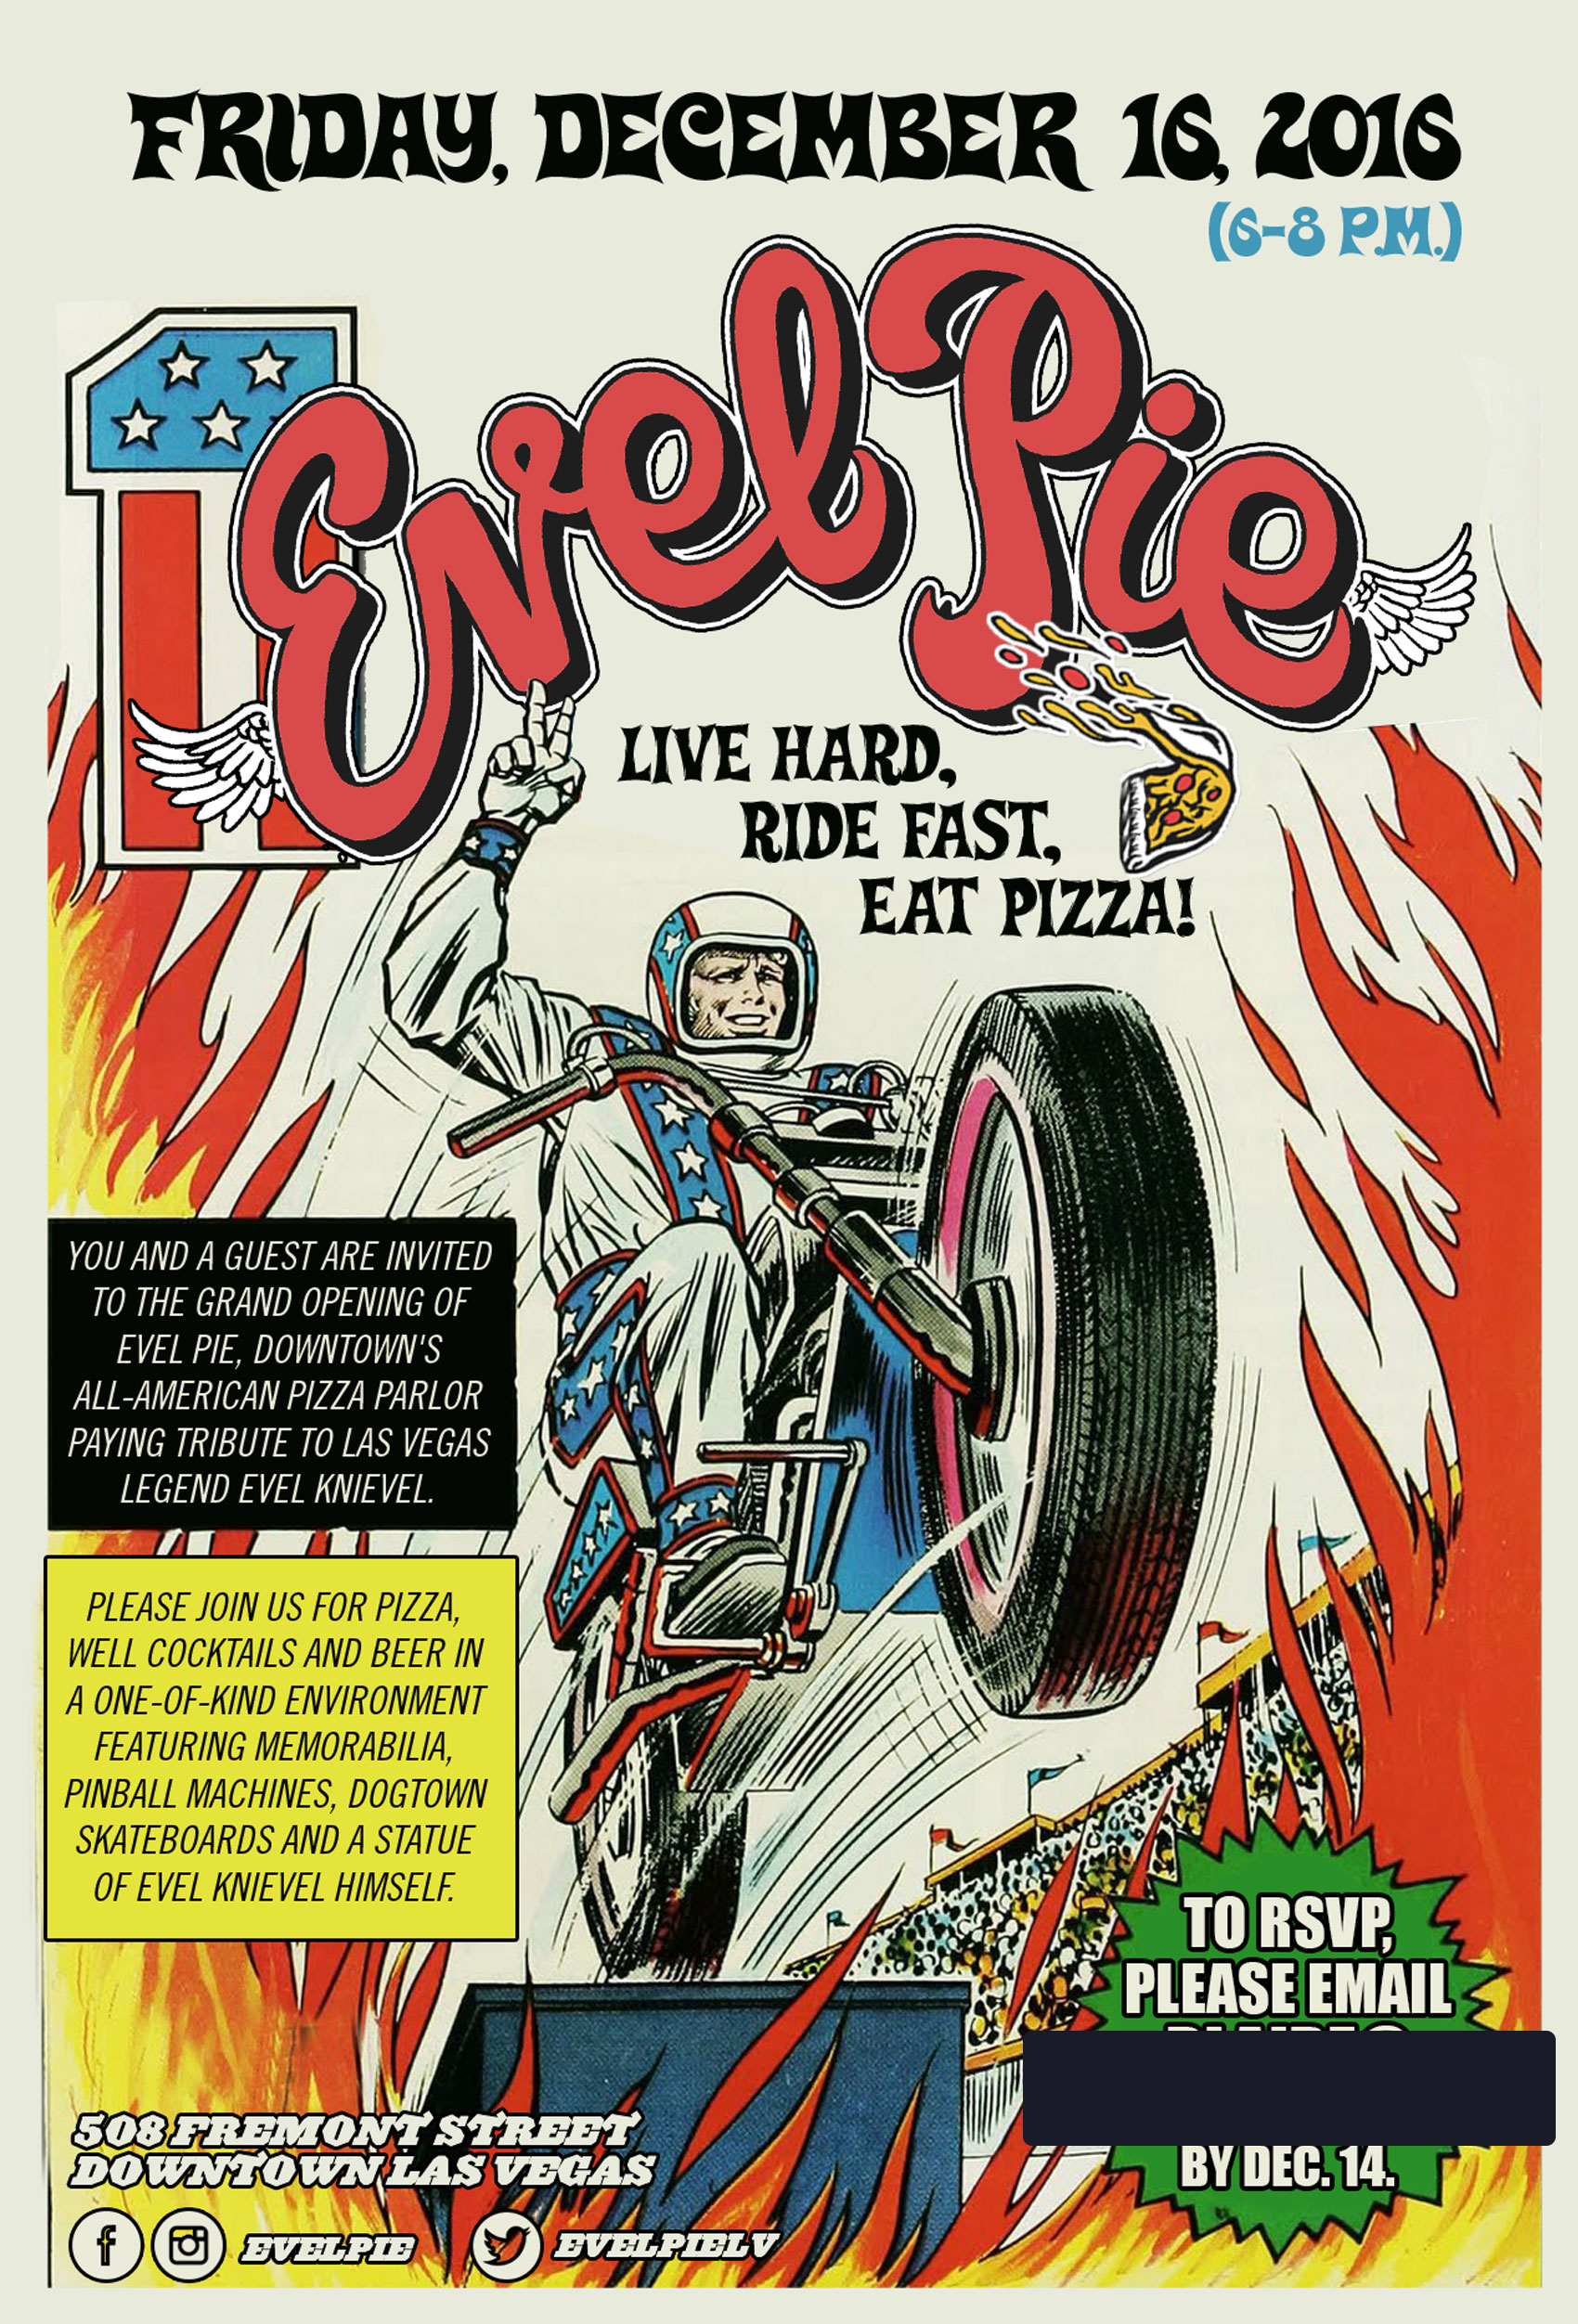 Evel Pie, Branding Campaign